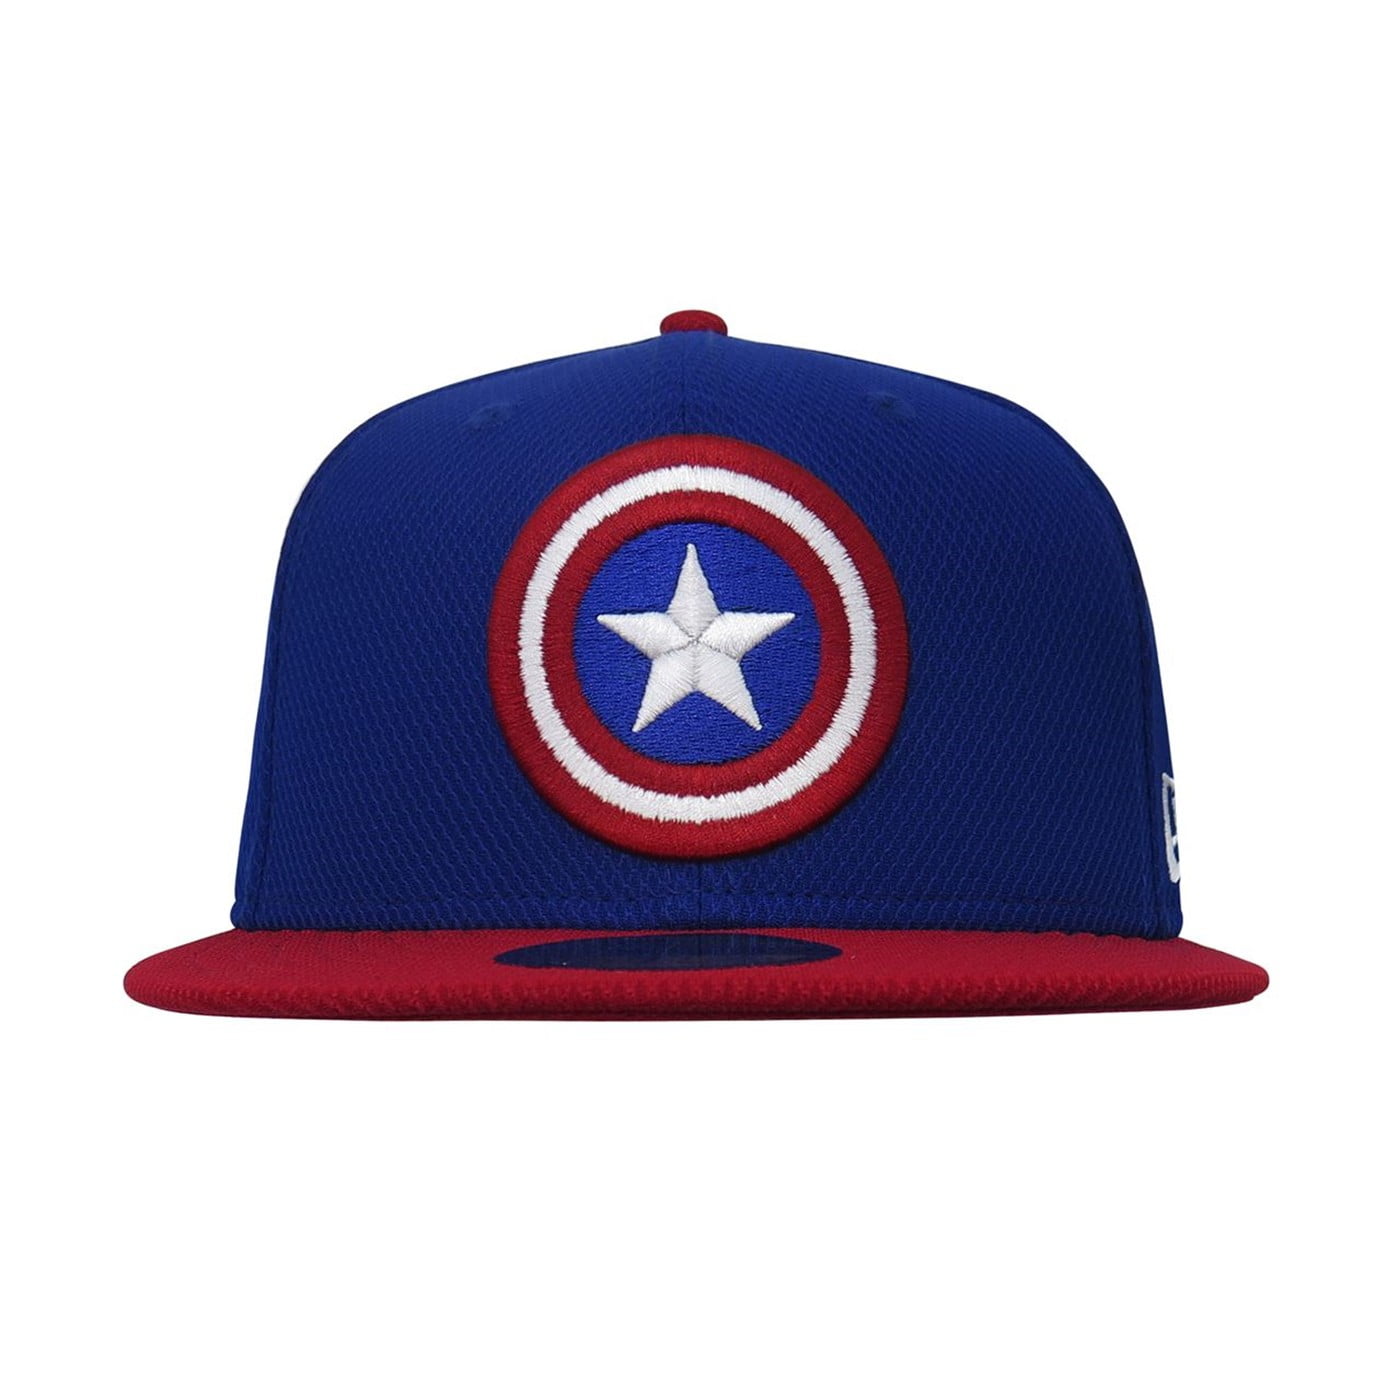 Original NEW ERA 59FIFTY FITTED CAP Action Captain America Marvel blau 